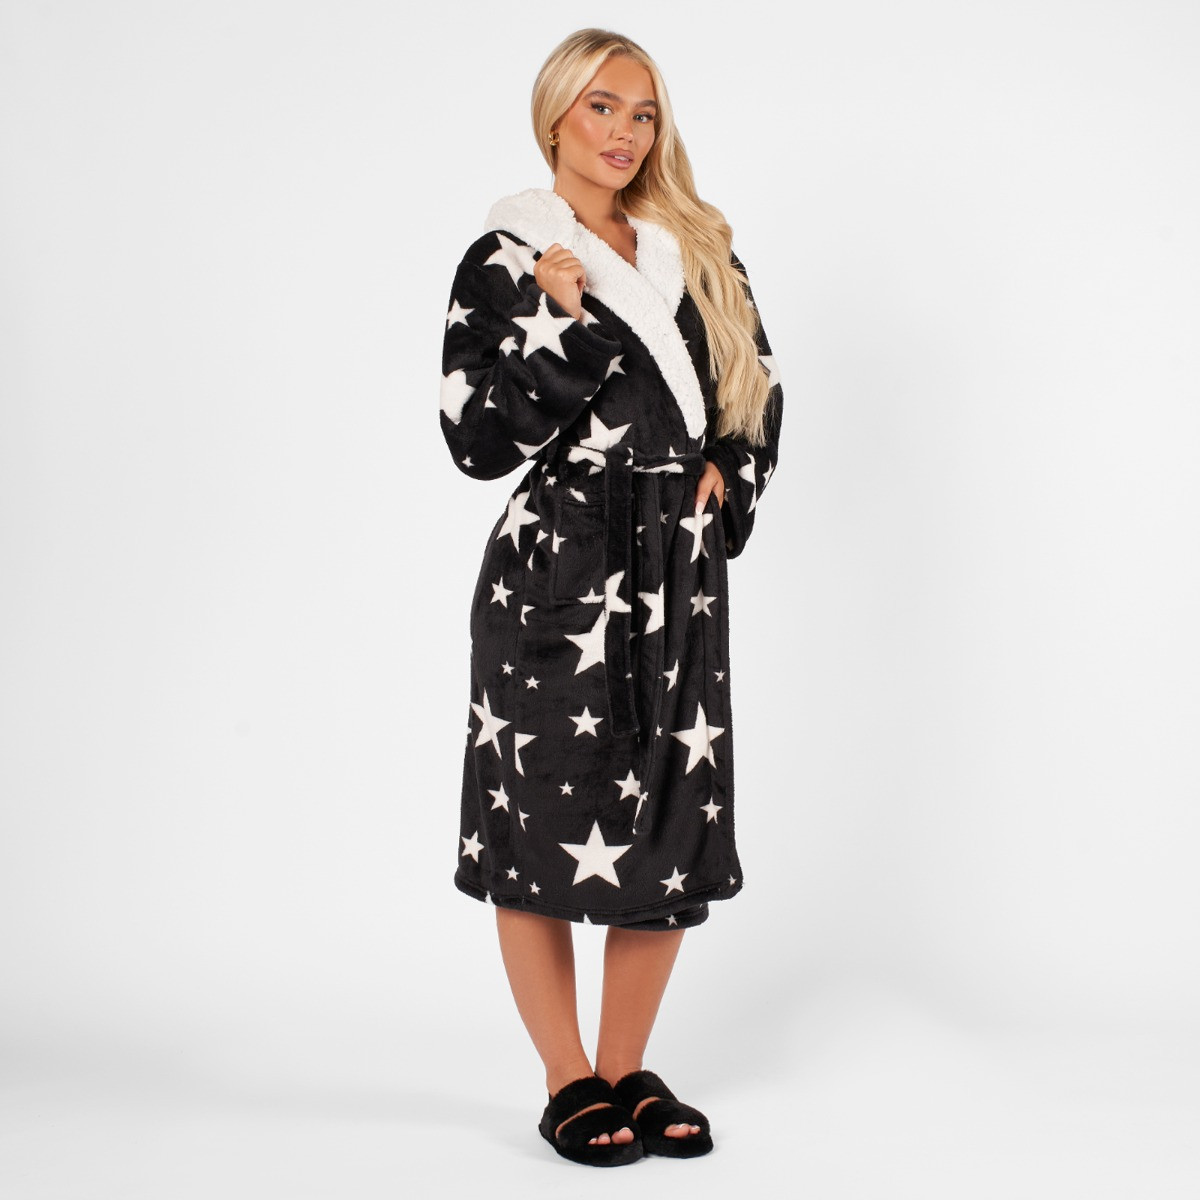 Dreamscene Star Print Hooded Sherpa Fleece Dressing Gown - Black>